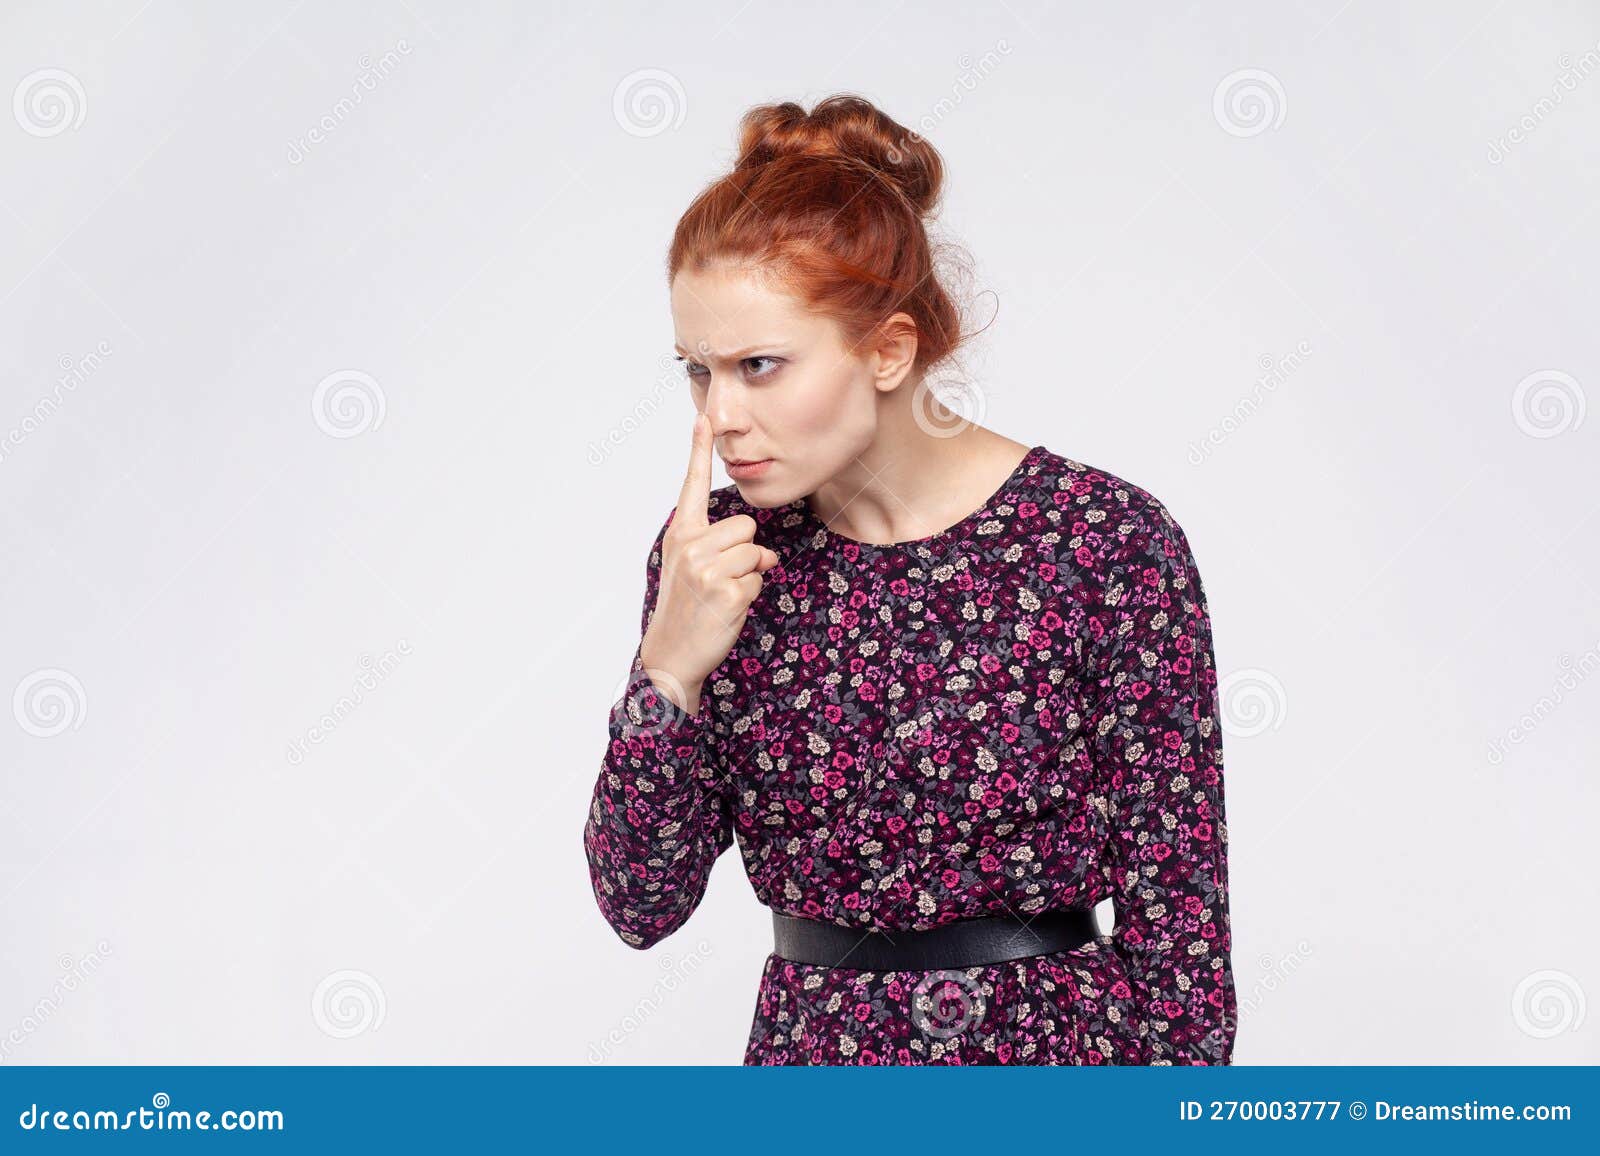 woman pointing nose doing lie gesture, suspecting trickster in falsehood, disbelief.